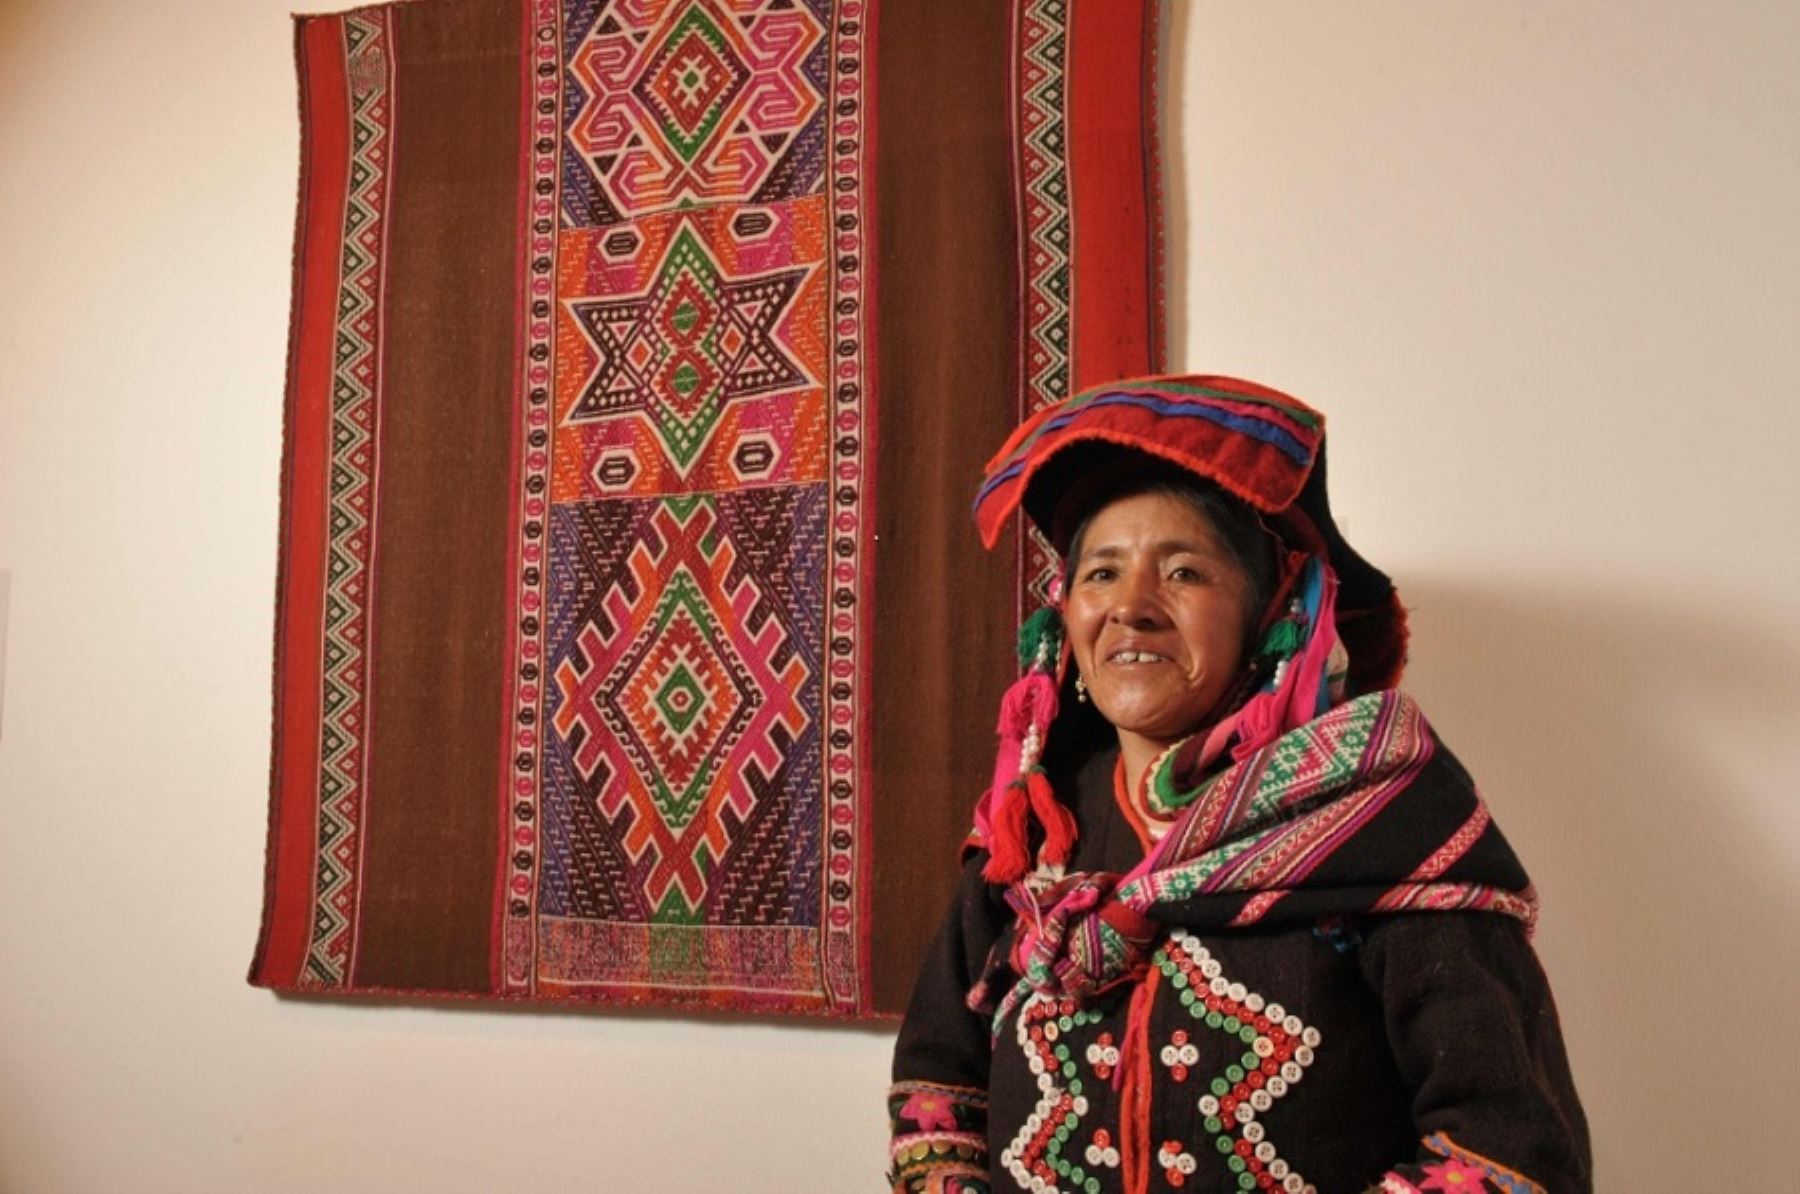 Santusa Cutipa Cutipa, artesana de Puno dedicada a la línea artesanal textil.